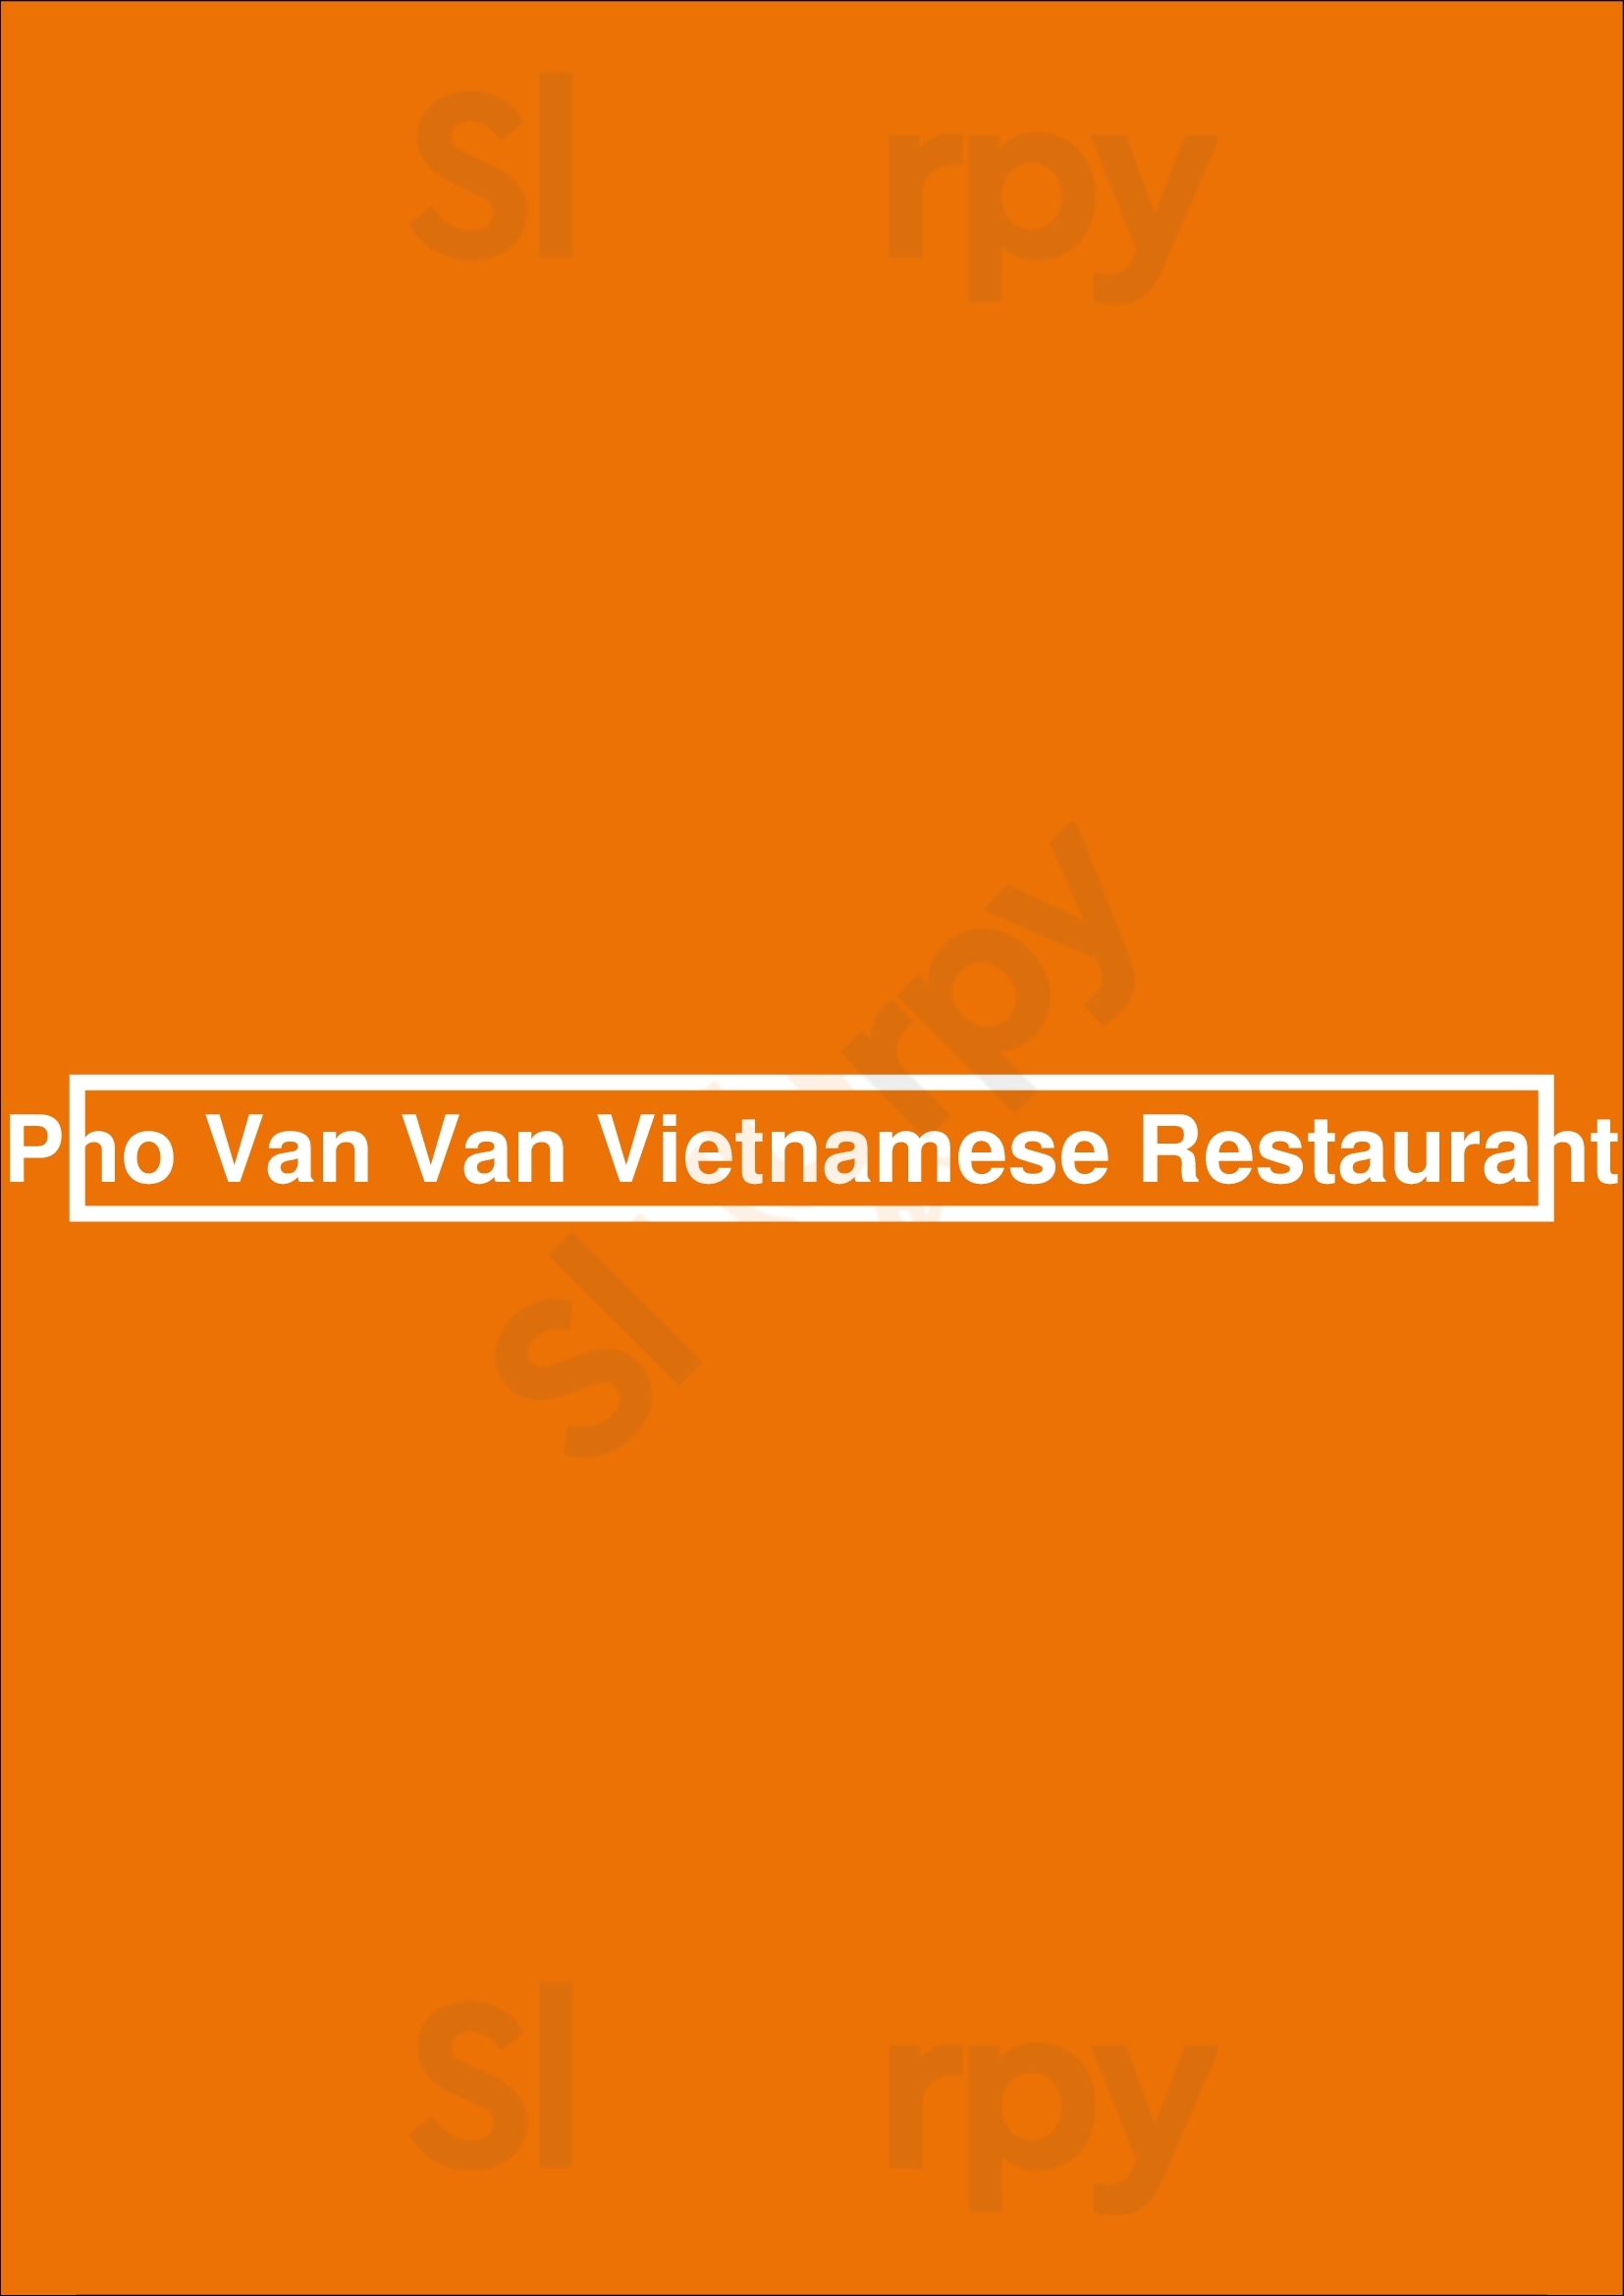 Pho Van Van Vietnamese Restaurant Ottawa Menu - 1